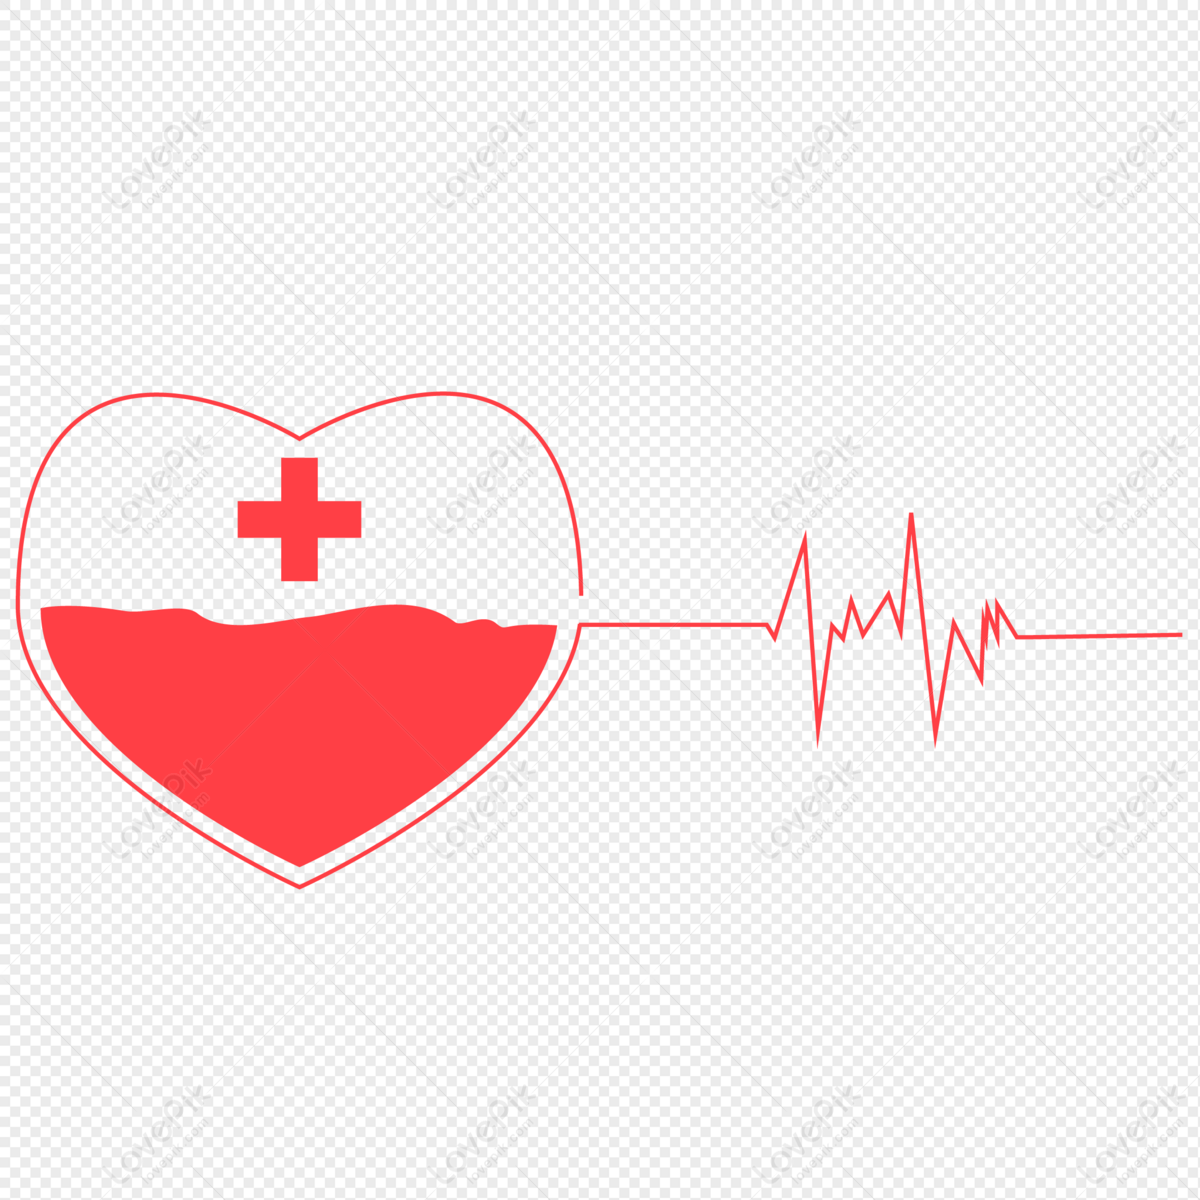 Сердце донор вектор. Донор фон. Донор PNG. Значок в виде донорского сердца.